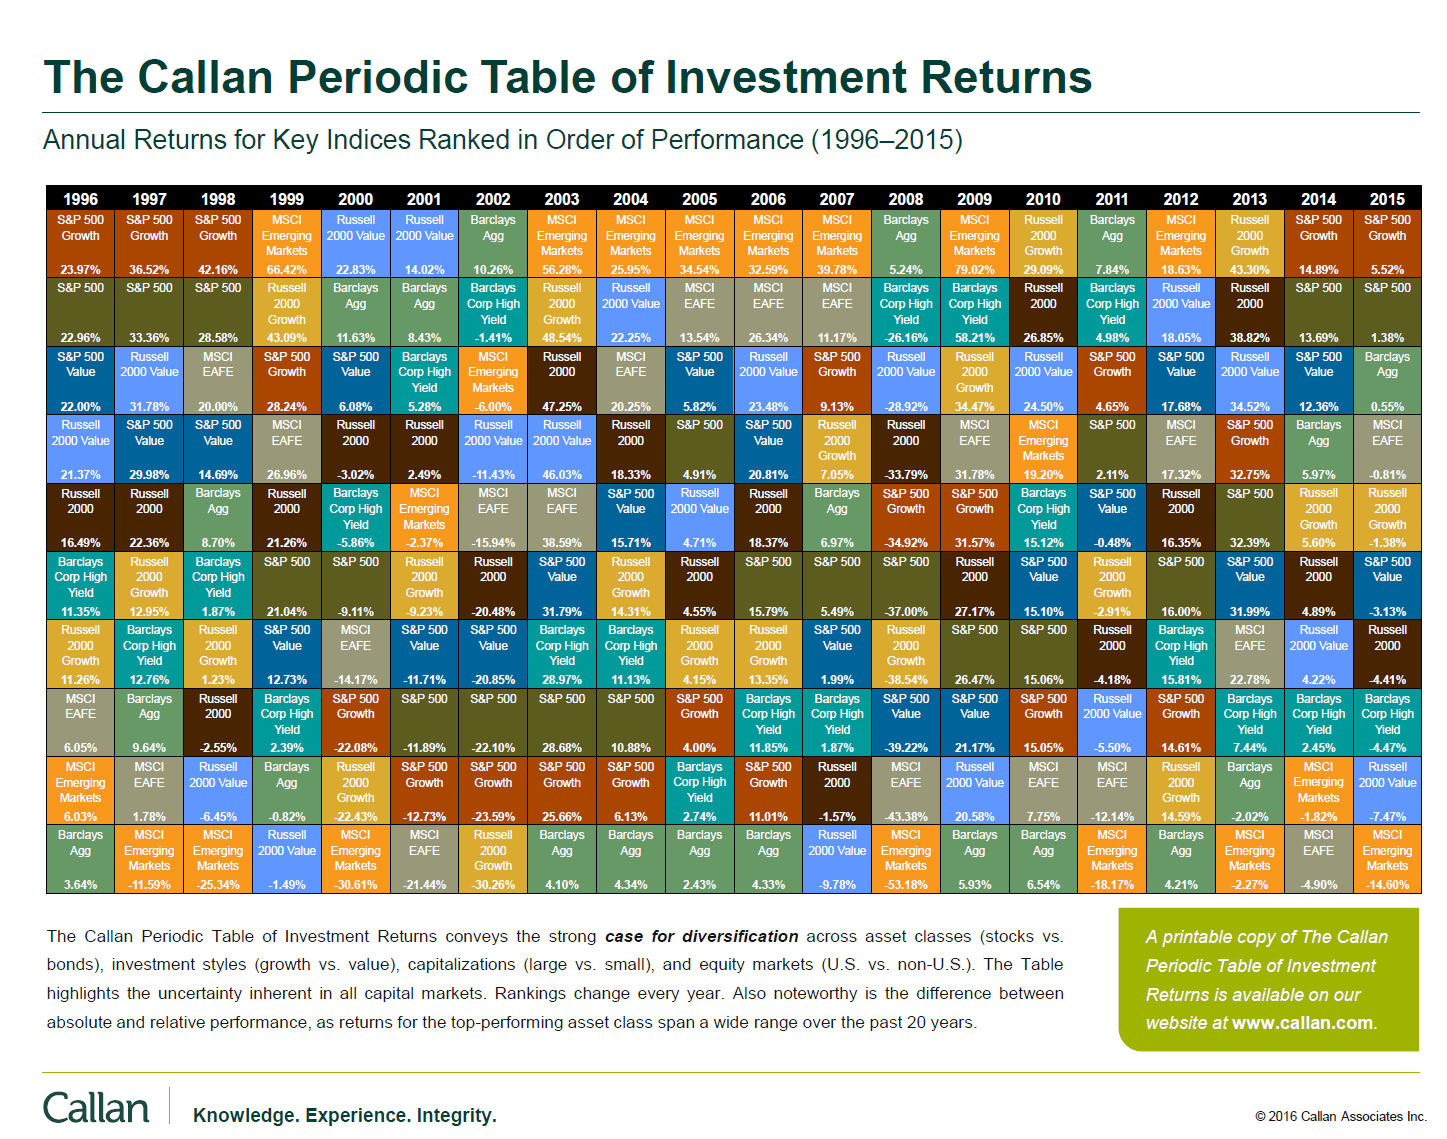 Callan Periodic Table of Investment Returns 2015